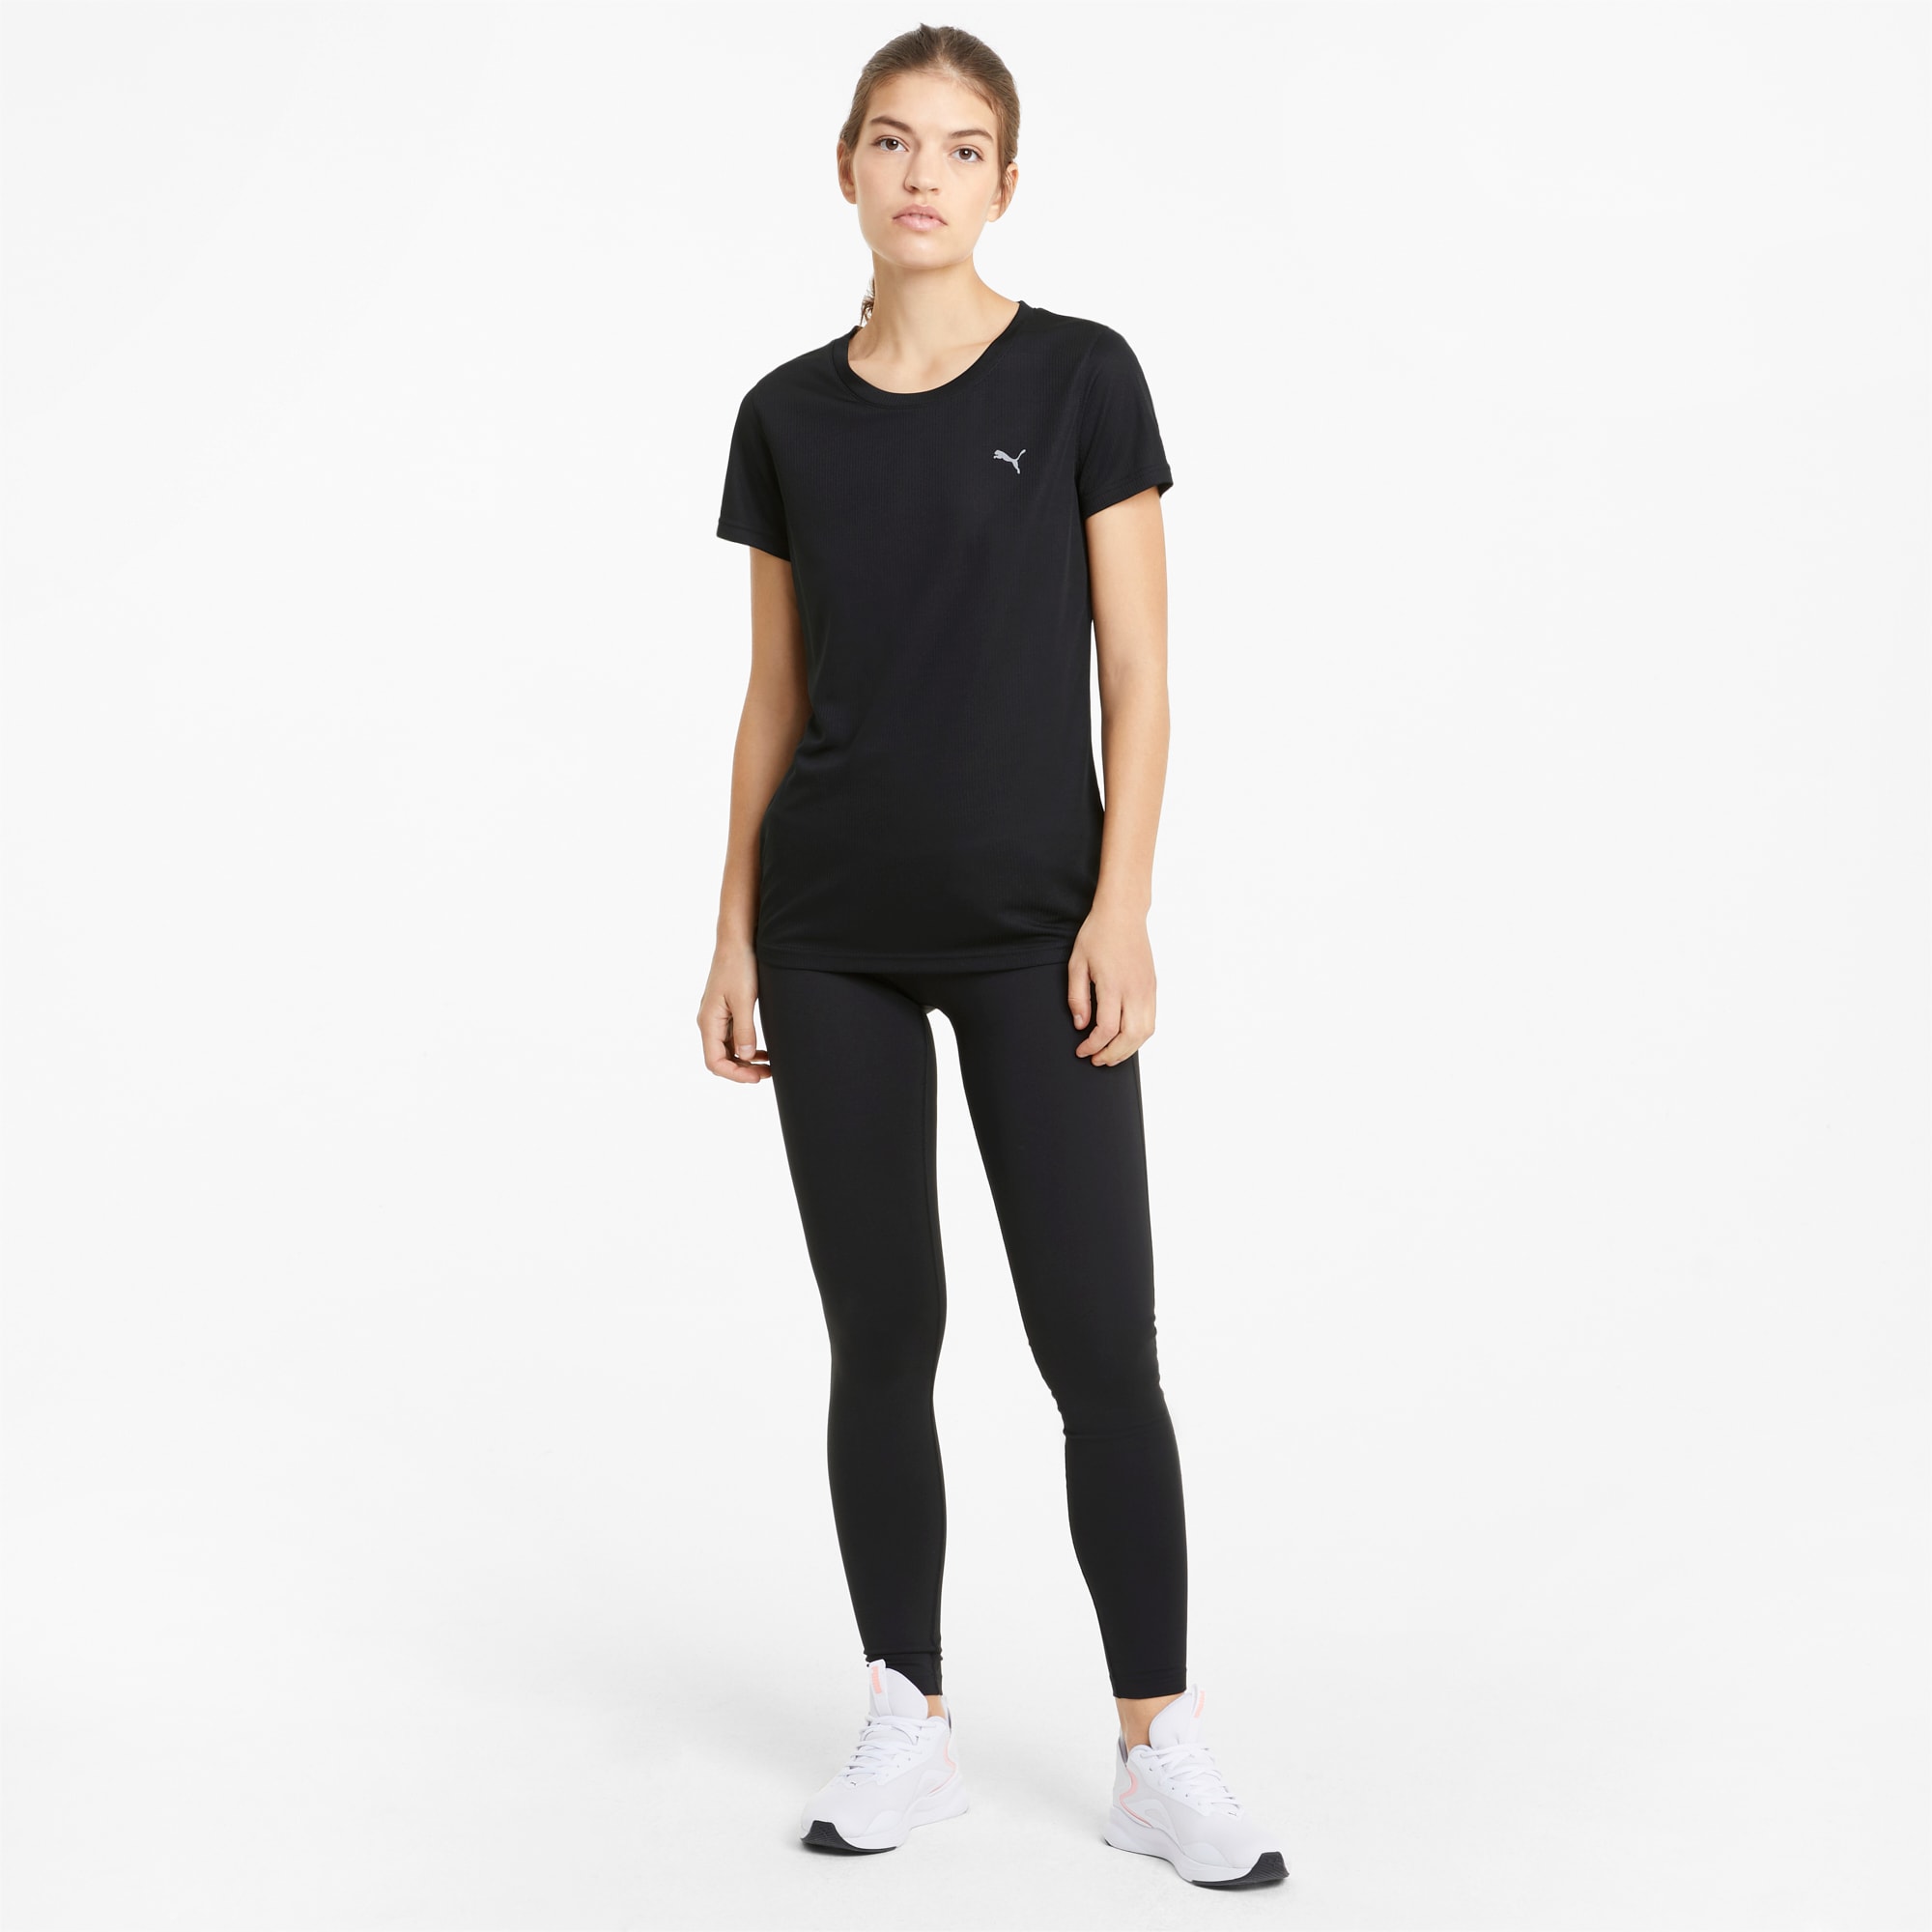 PUMA Performance Women's Training T-Shirt, Black, Size XS, Clothing